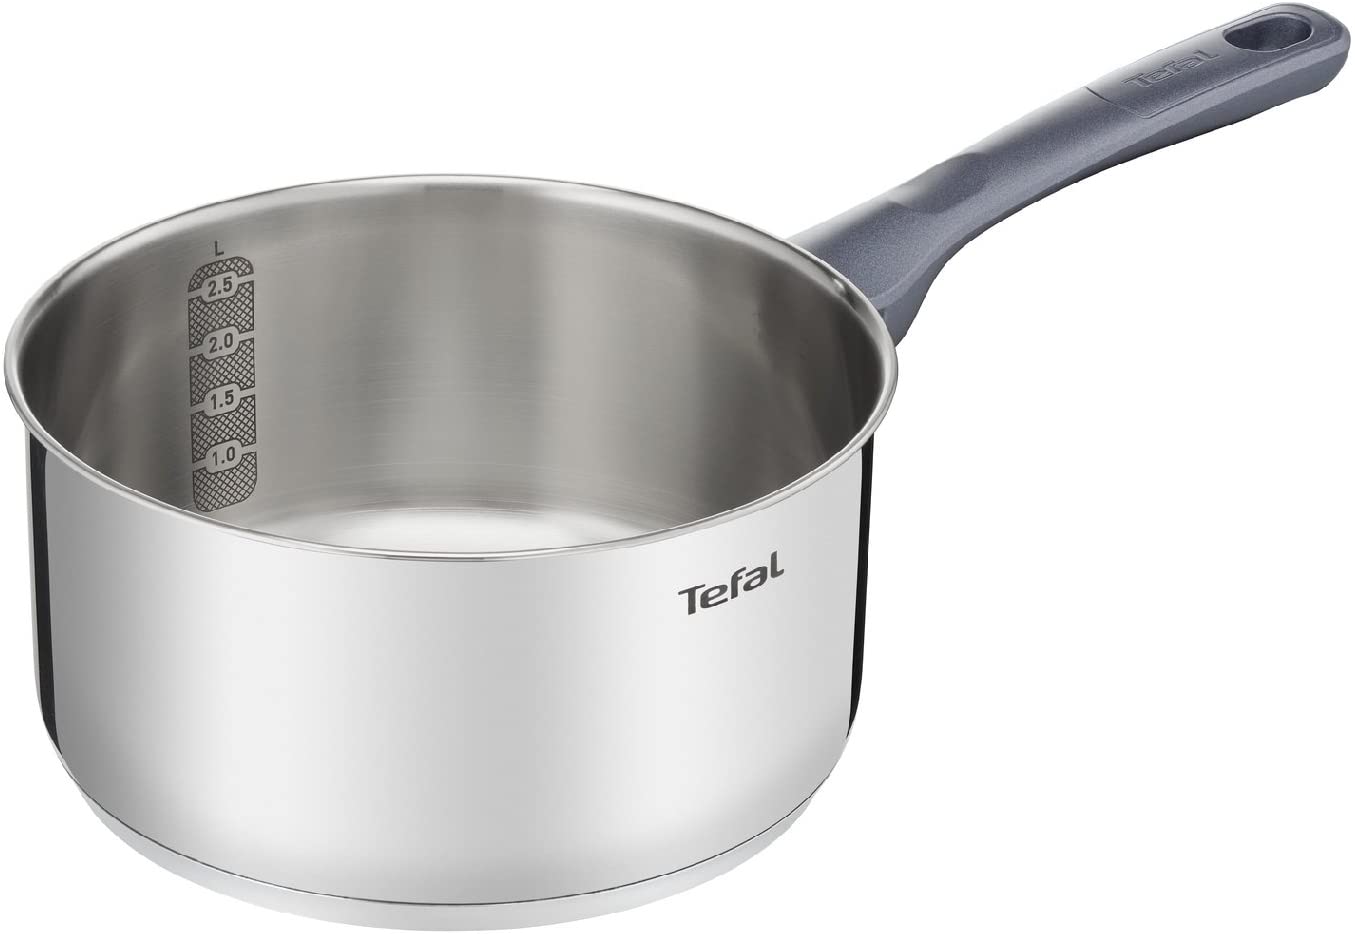 Tefal G7122914 dailycook Stainless Steel Frying Pan, 18 cm